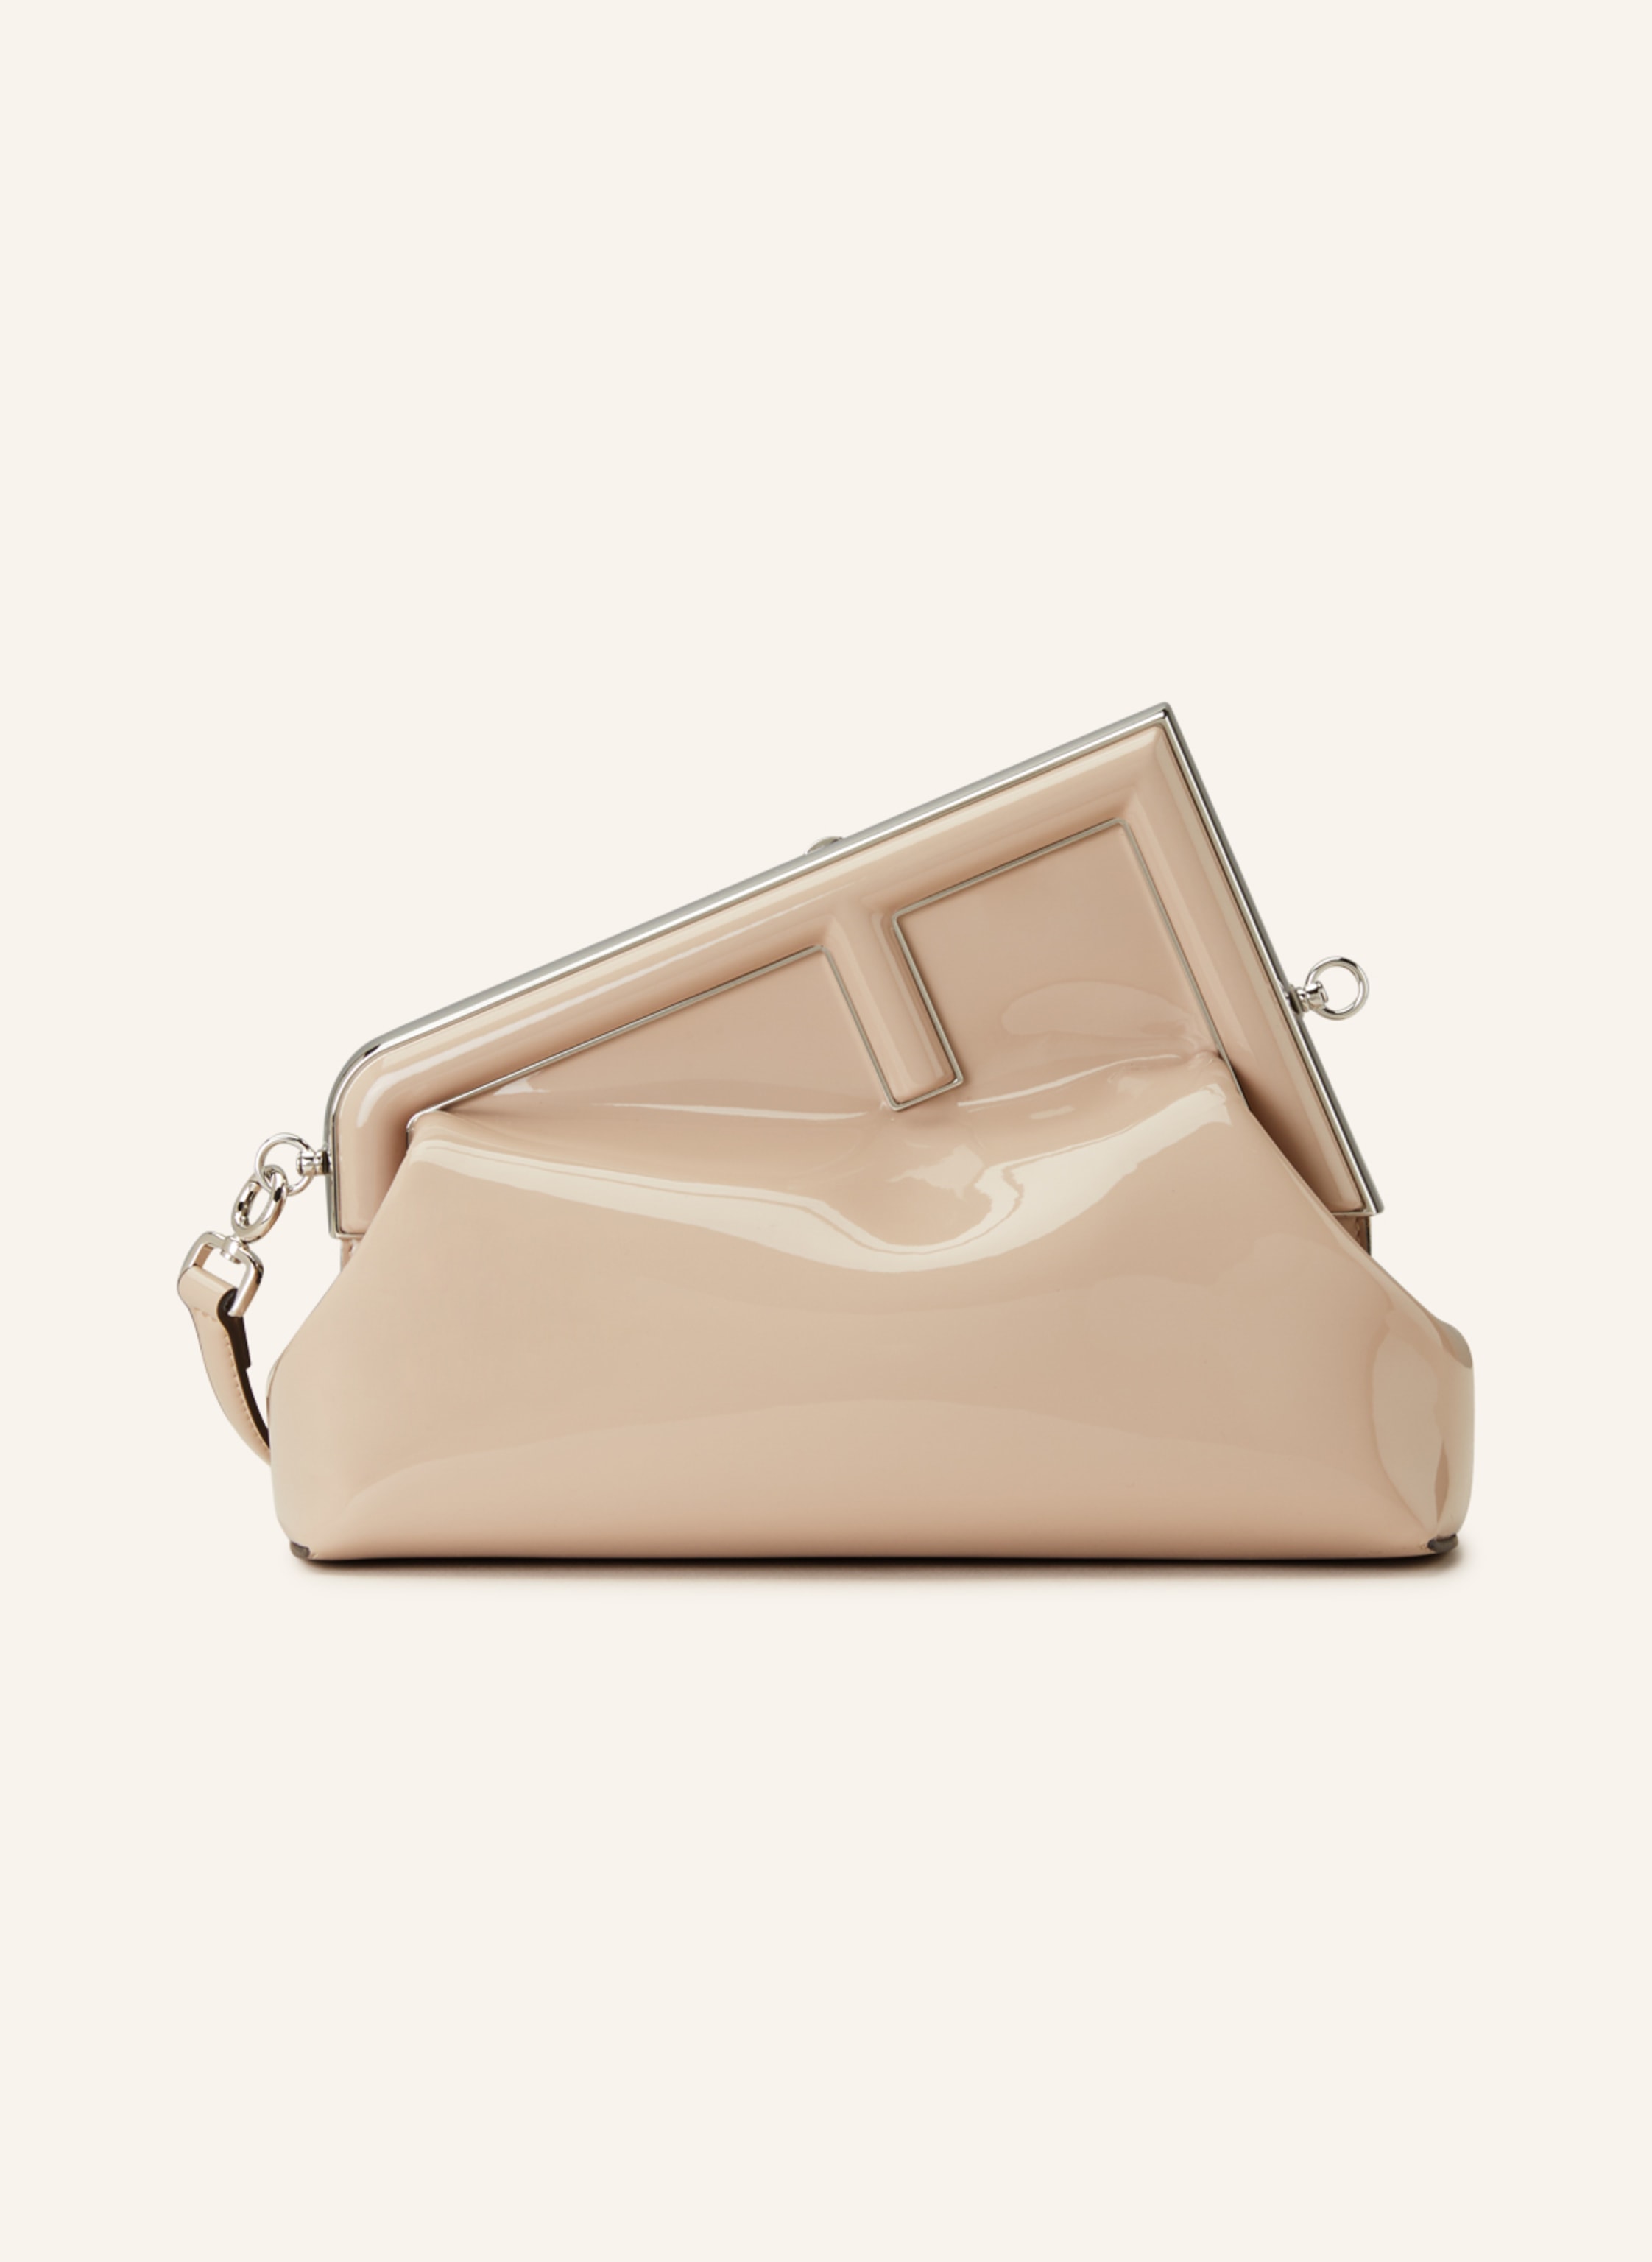 Fendi First Midi - Beige patent leather bag